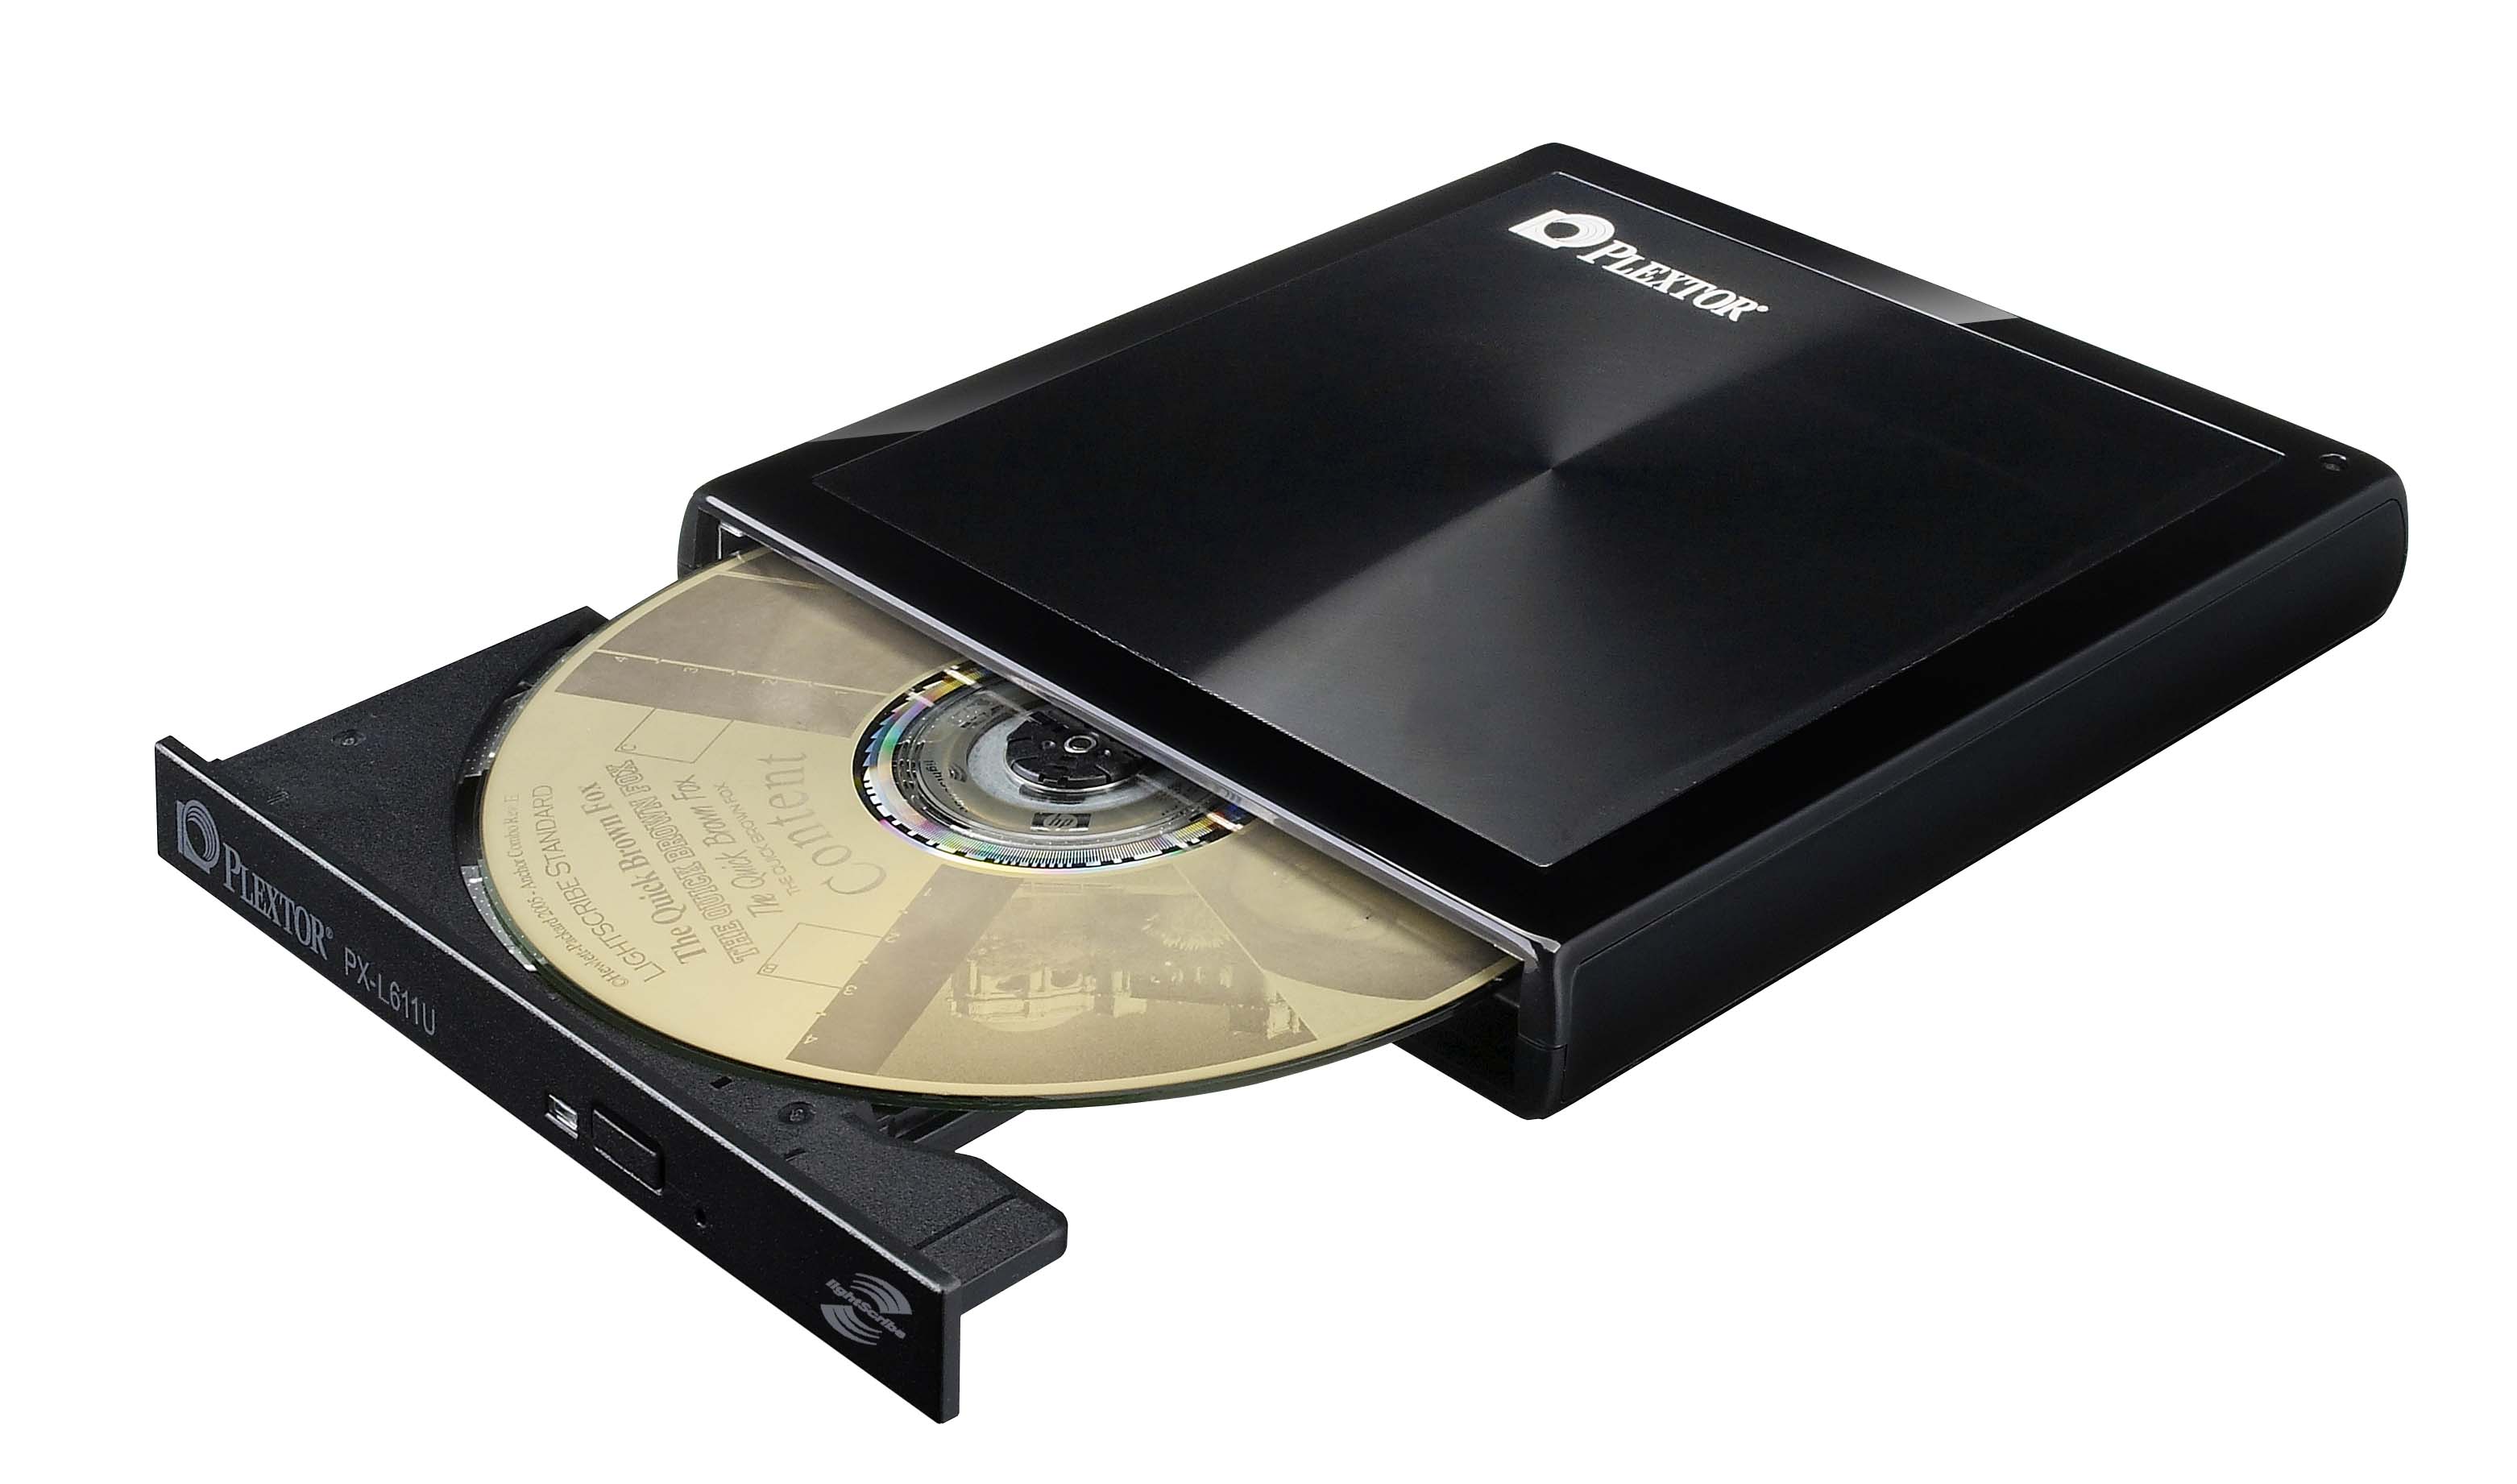 Grabadora DVD Slim externa